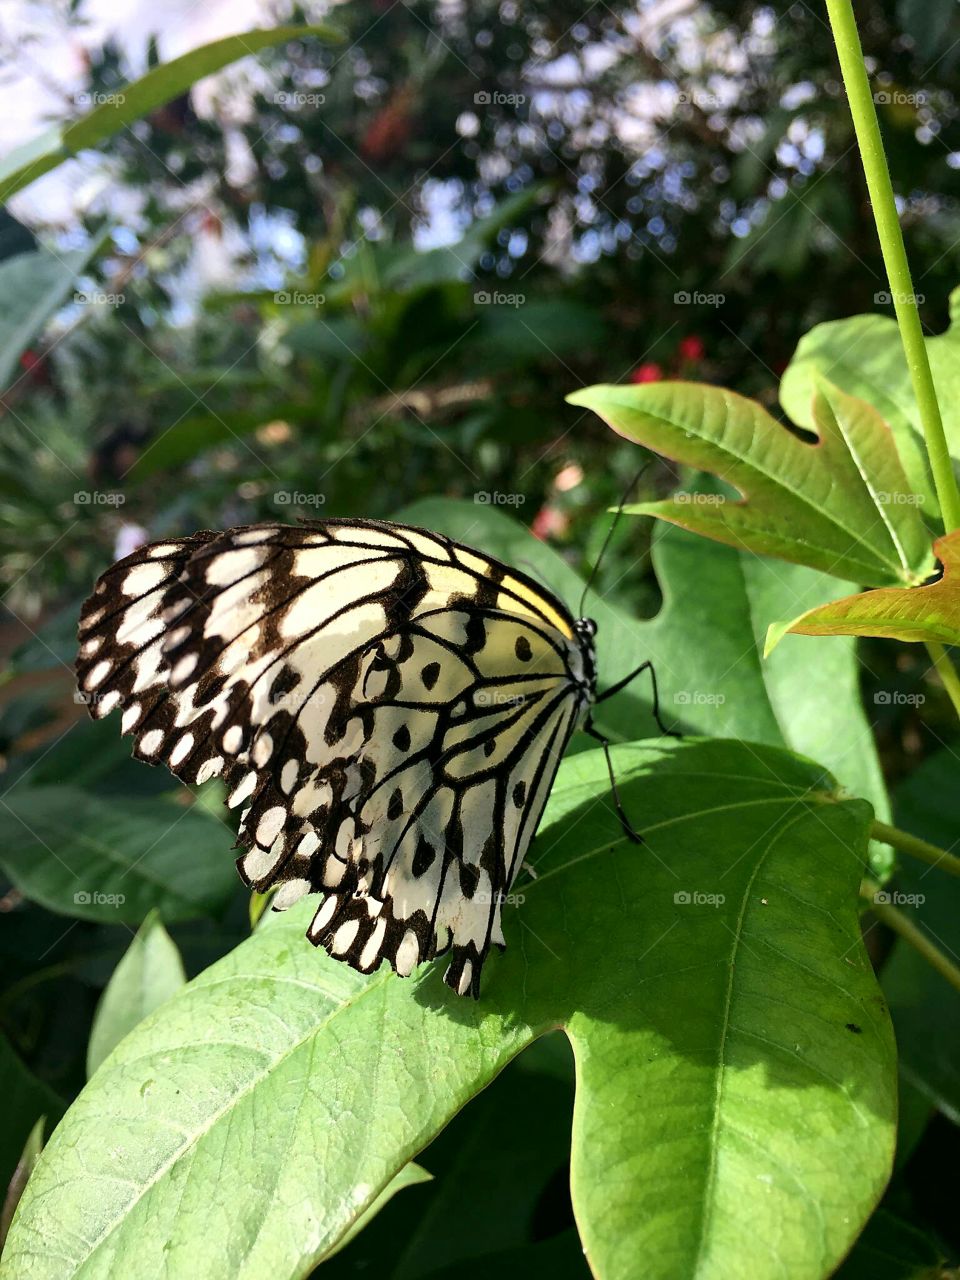 Butterfly with heart pattern wings